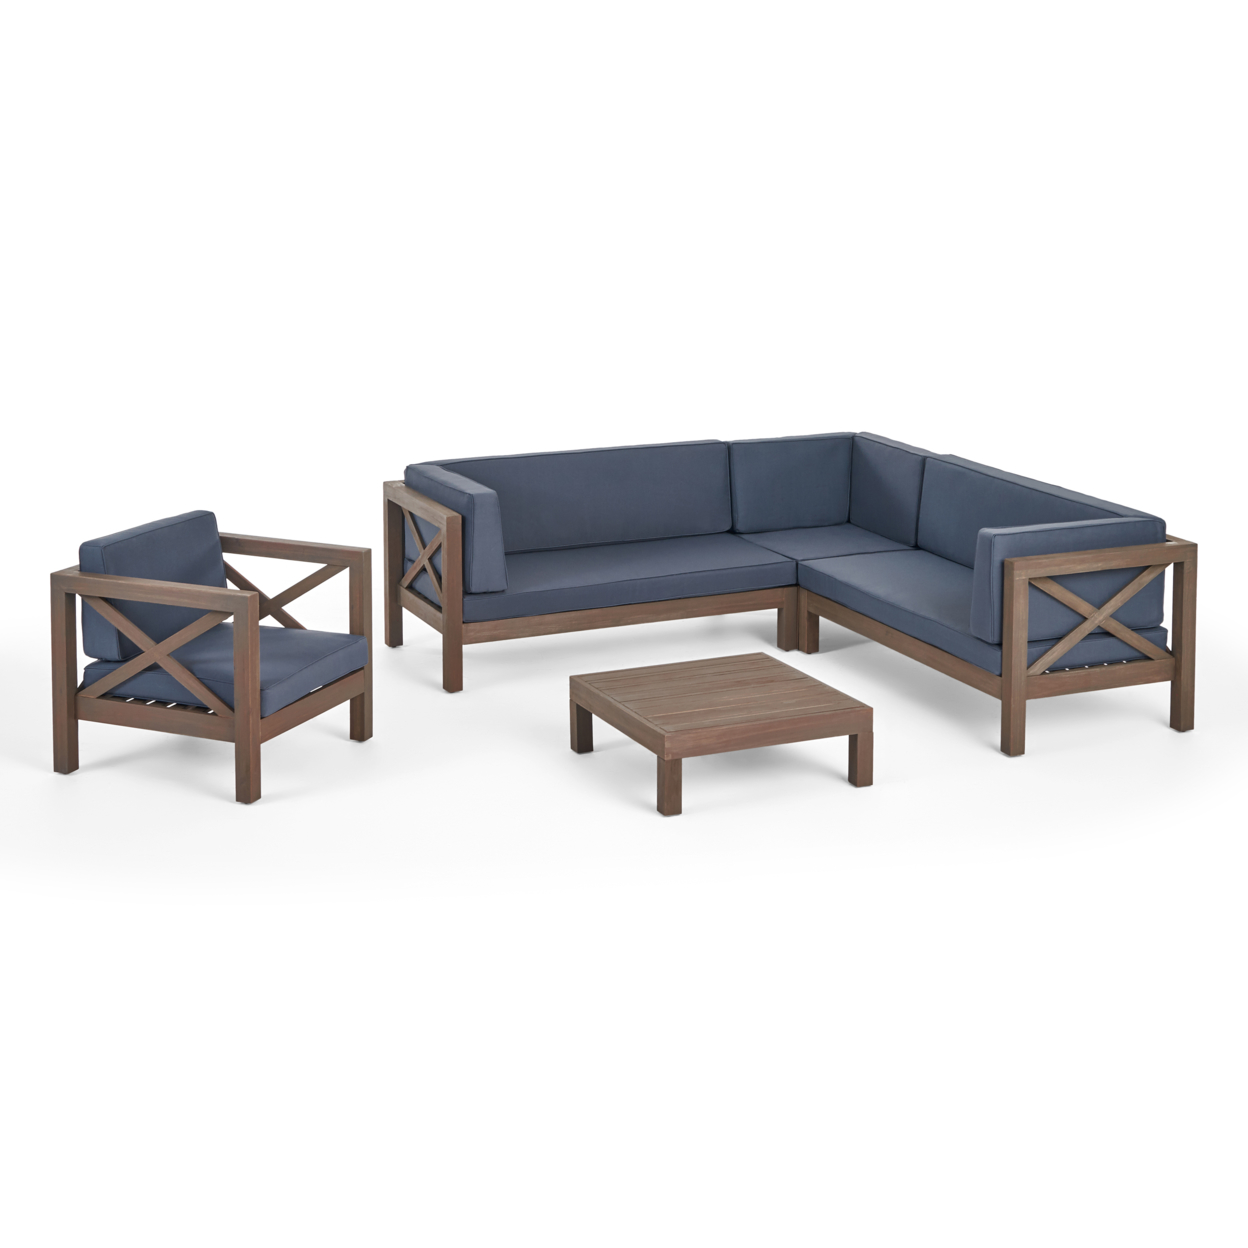 Morgan Outdoor 6 Seater Acacia Wood Sectional Sofa And Club Chair Set - Gray Finish + Dark Gray